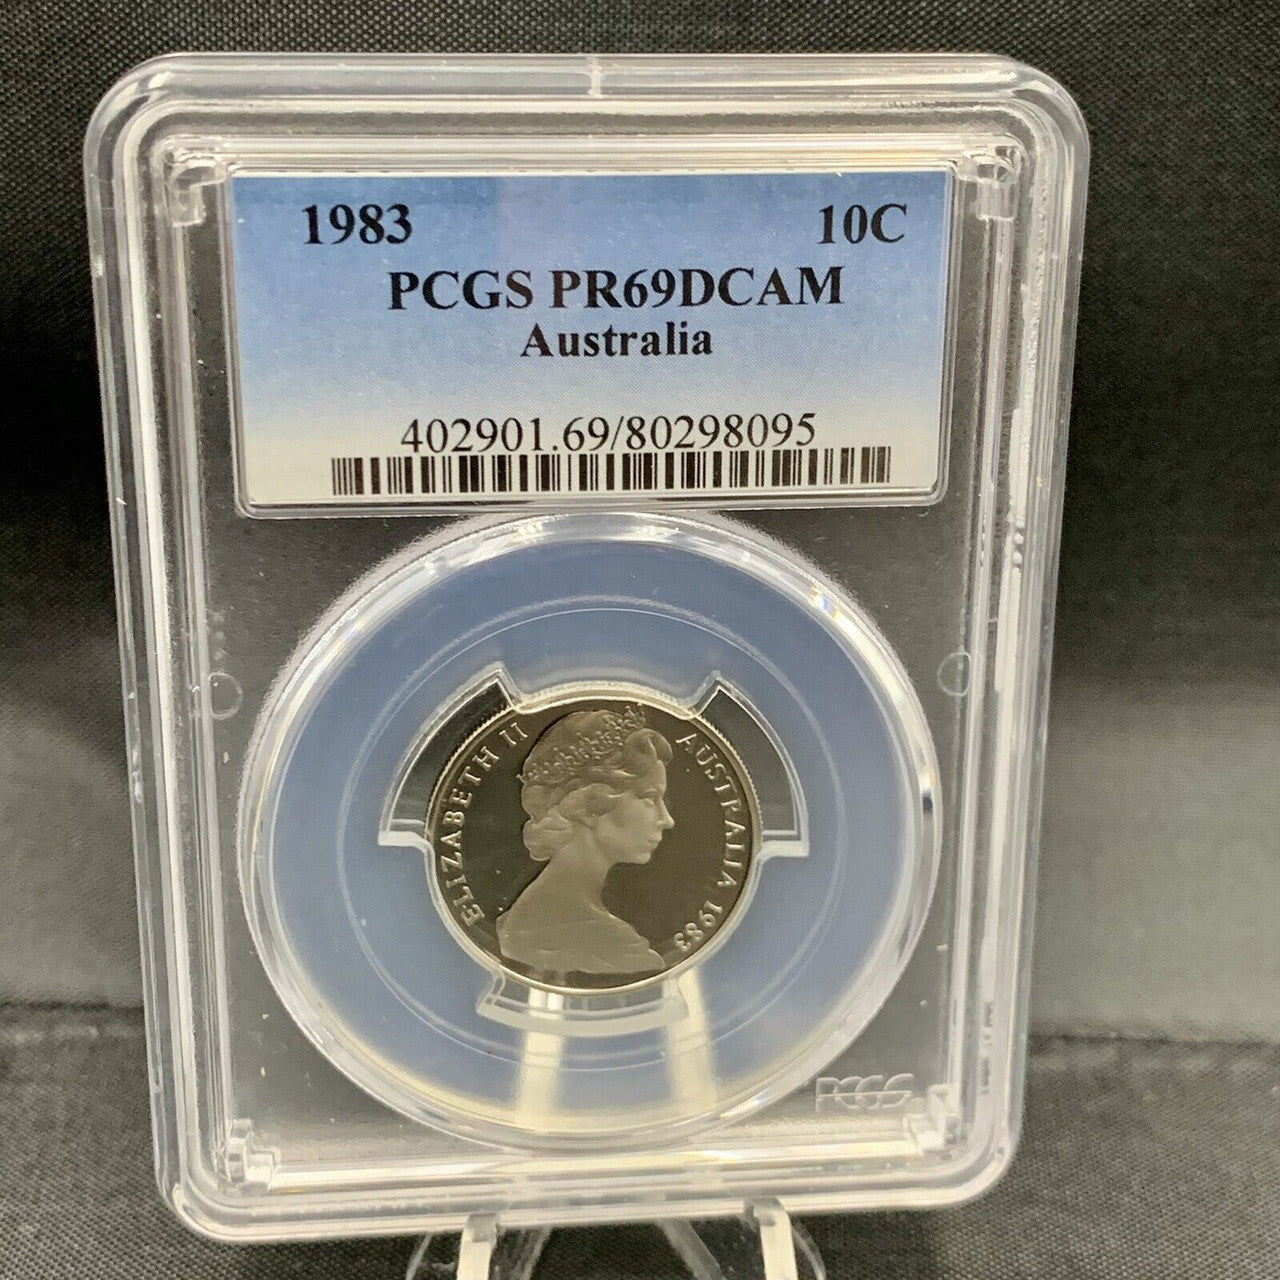 1983 Australian 10c PCGS PR69DCAM Proof Coin